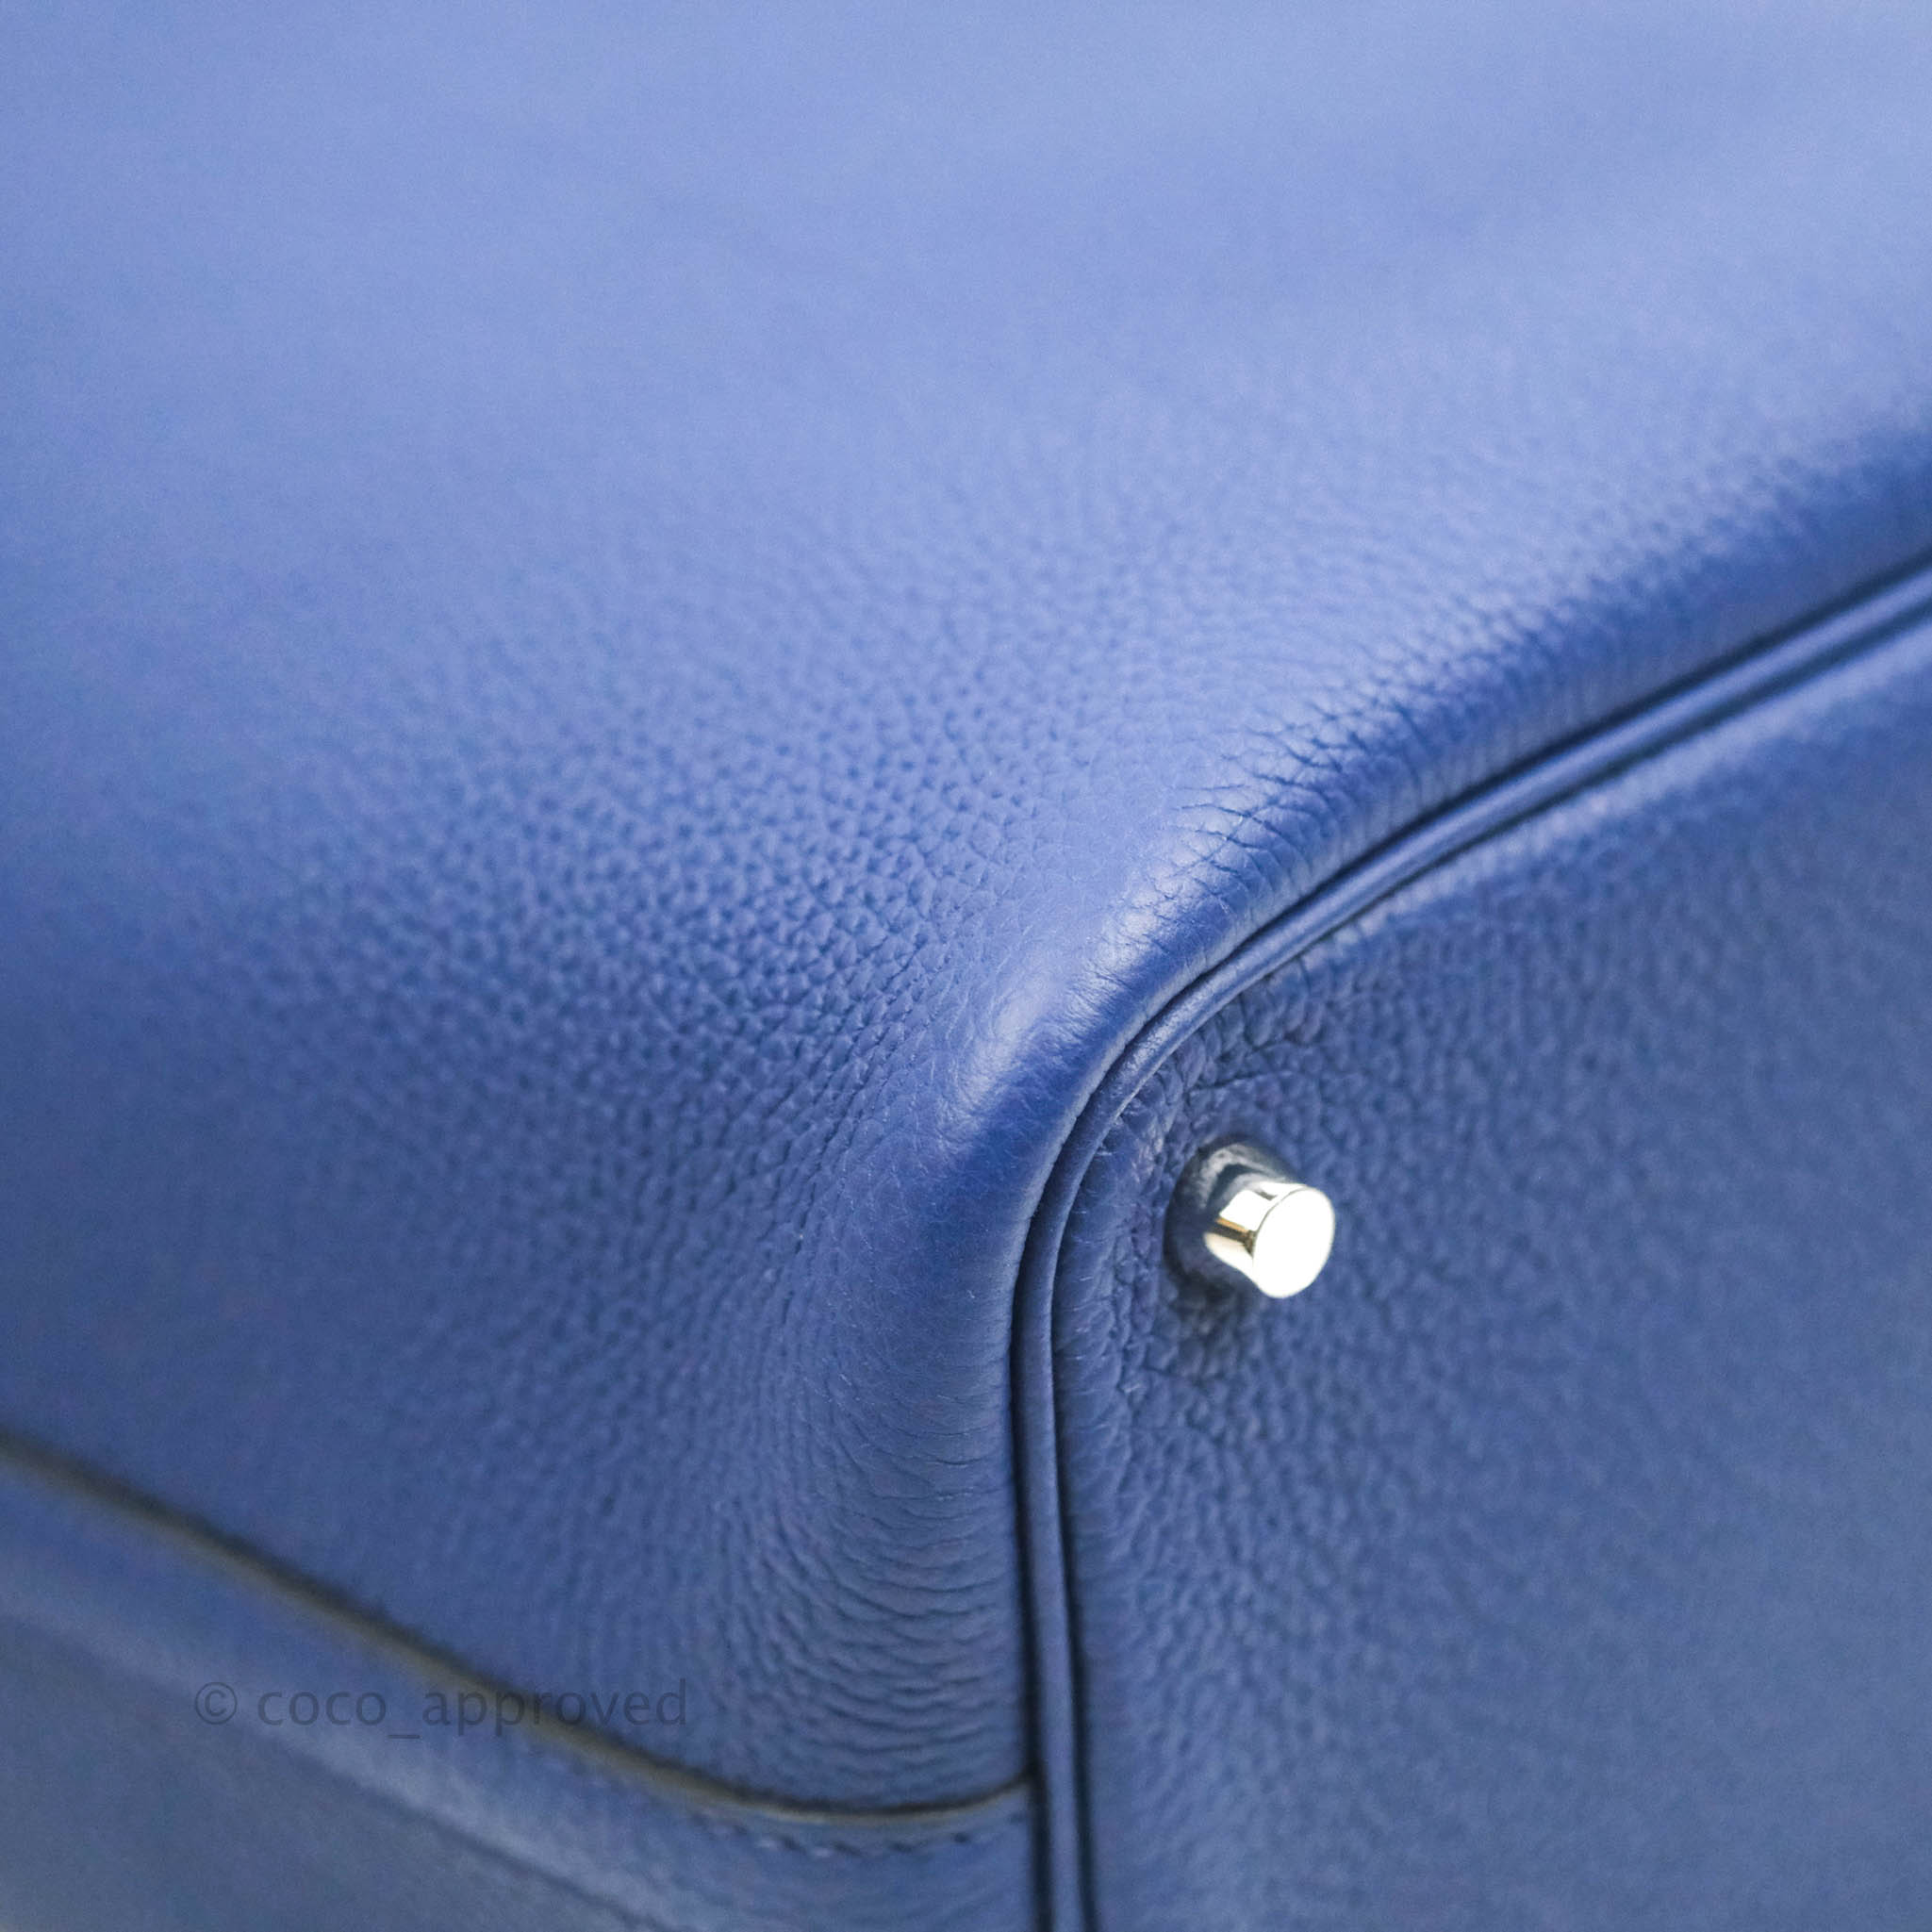 Hermes Picotin Eclat Lock 18 Bag Bleu Saphir / Bleu Brighton